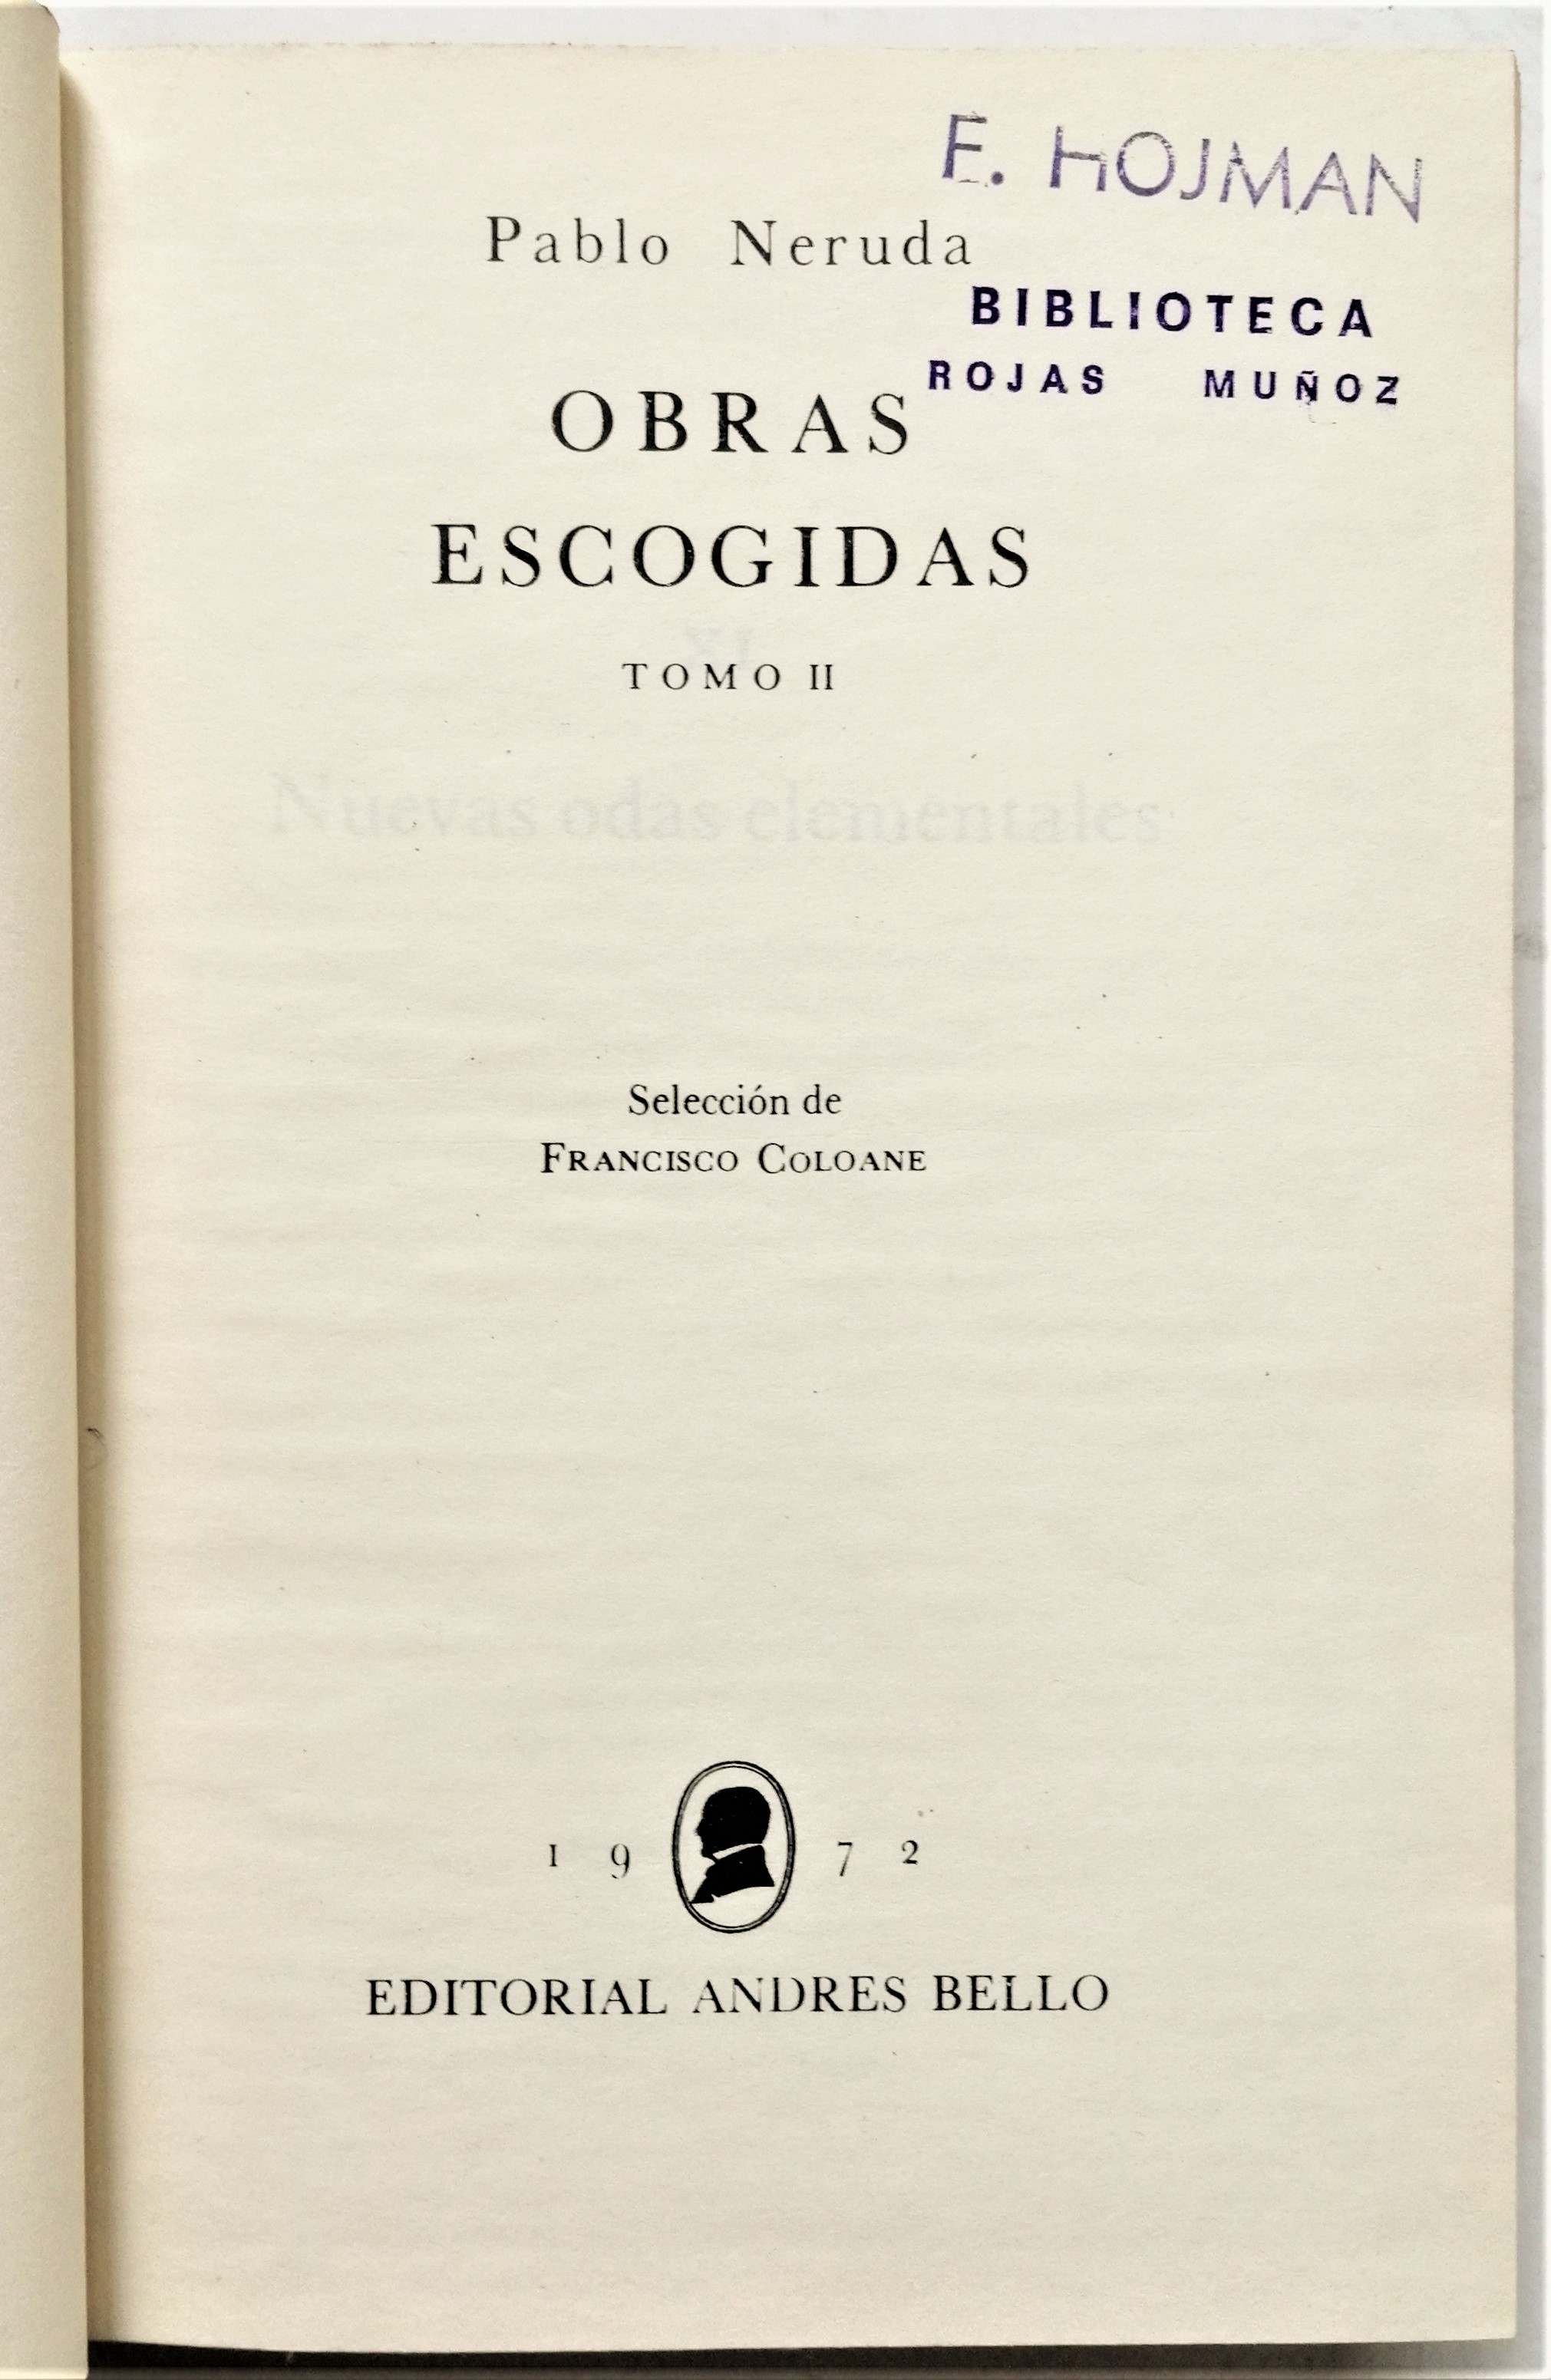 Pablo Neruda - Obras Escogidas